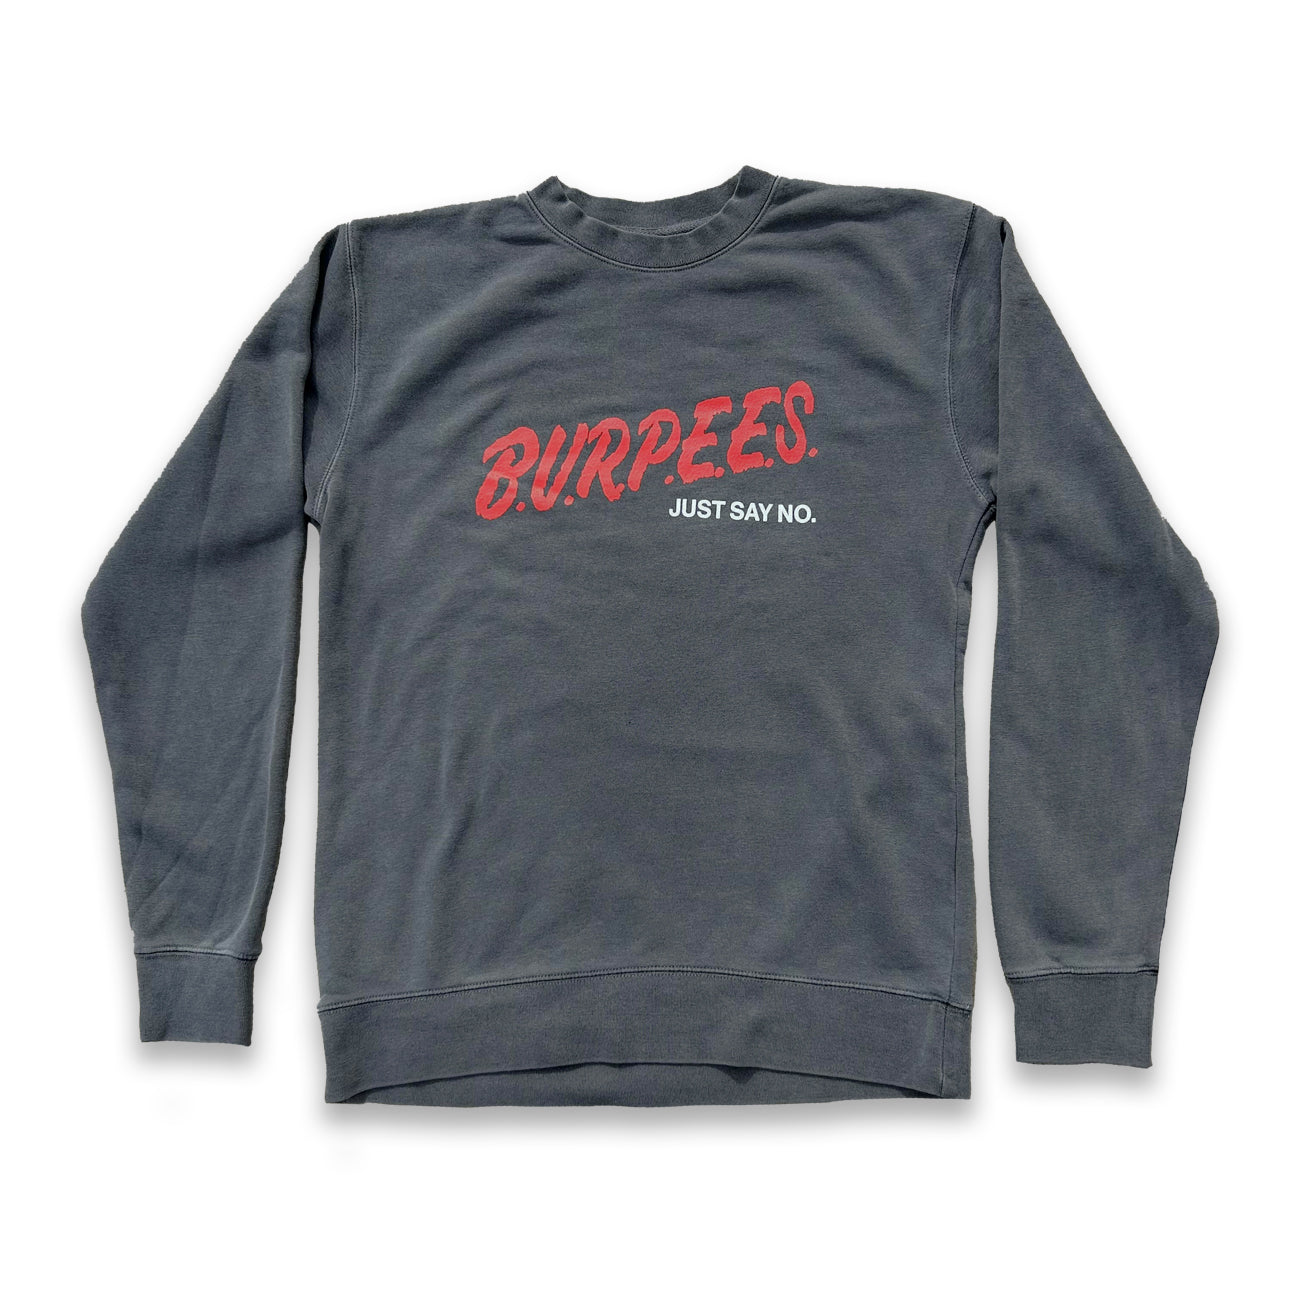 Burpees Midweight Crewneck Sweatshirt